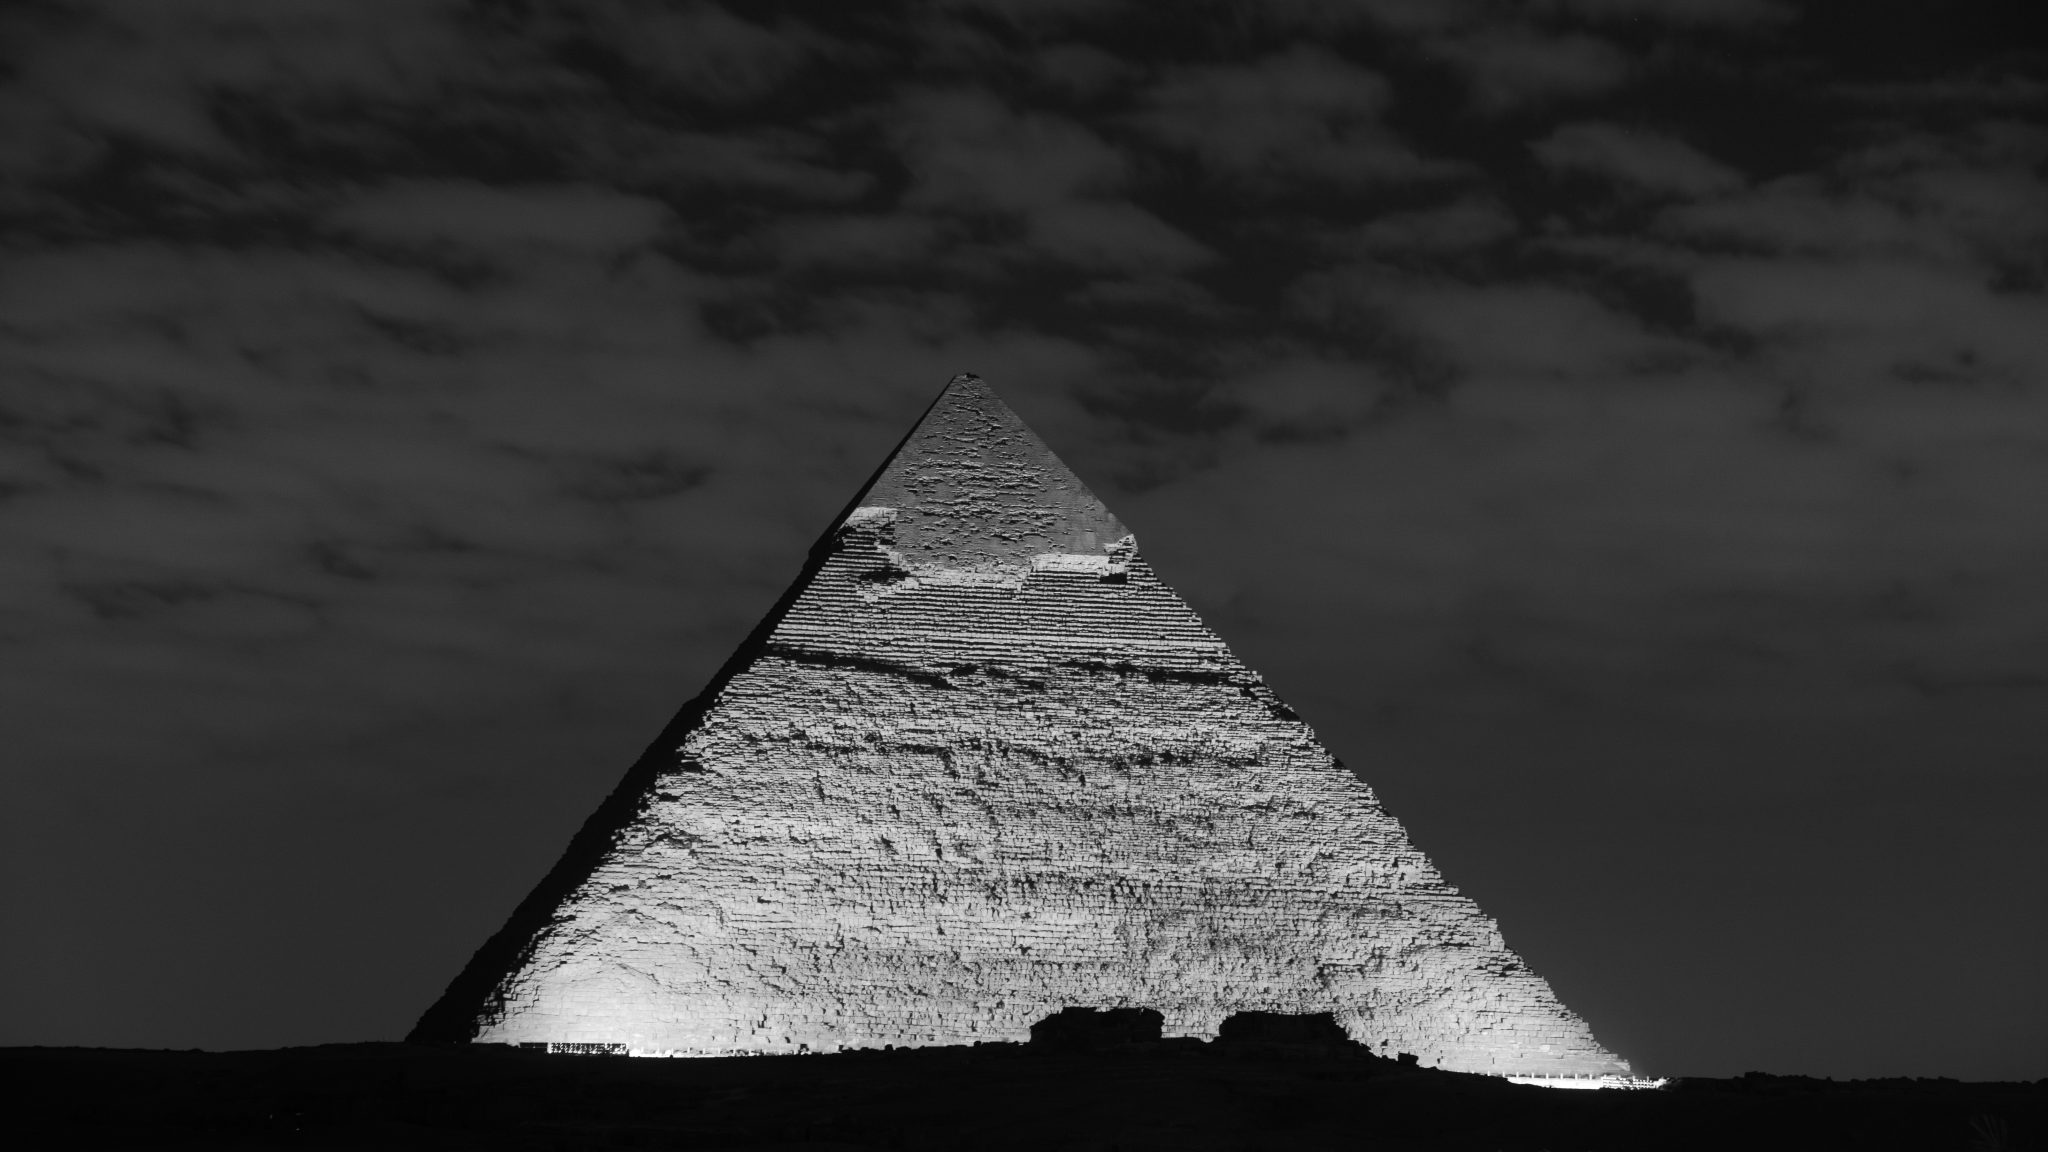 The Great Pyramid of Giza lit up at night.